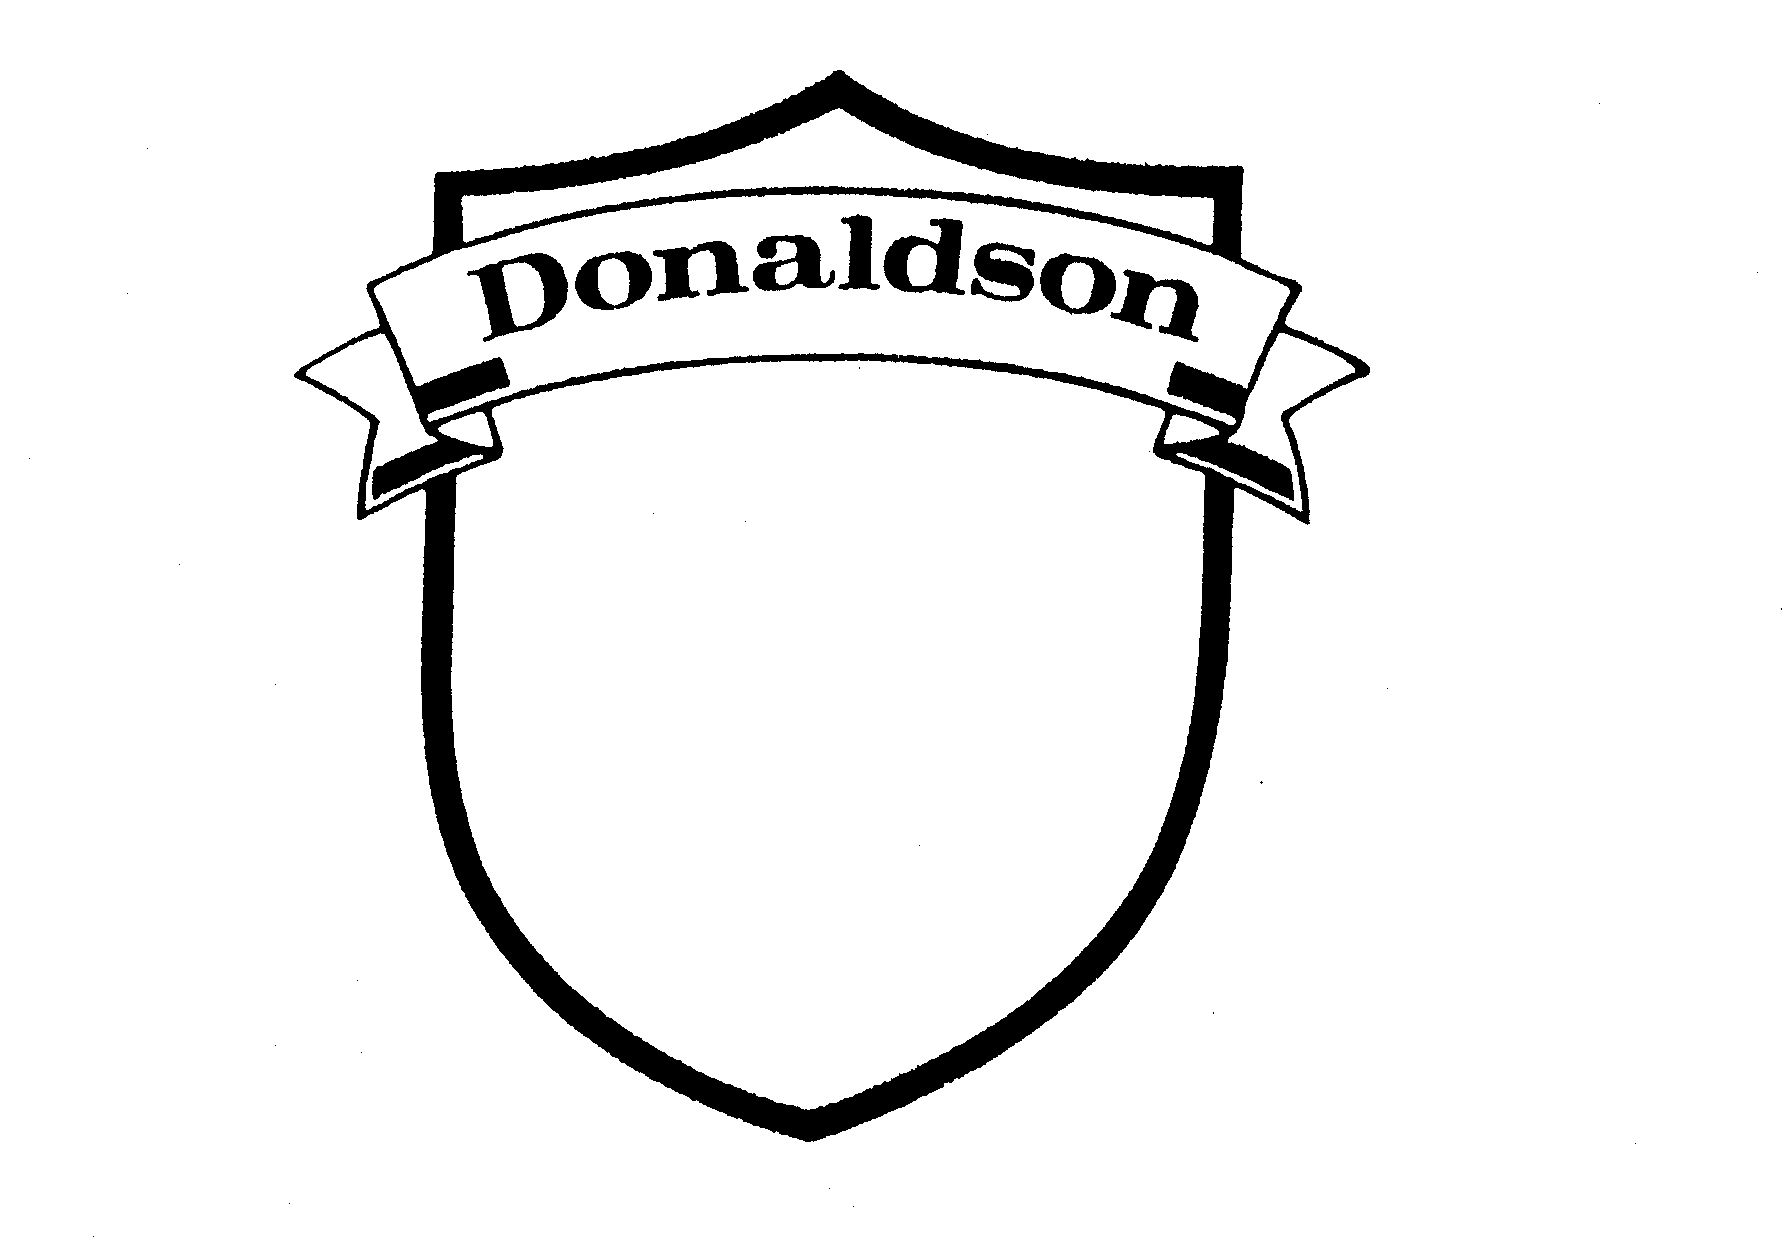 DONALDSON